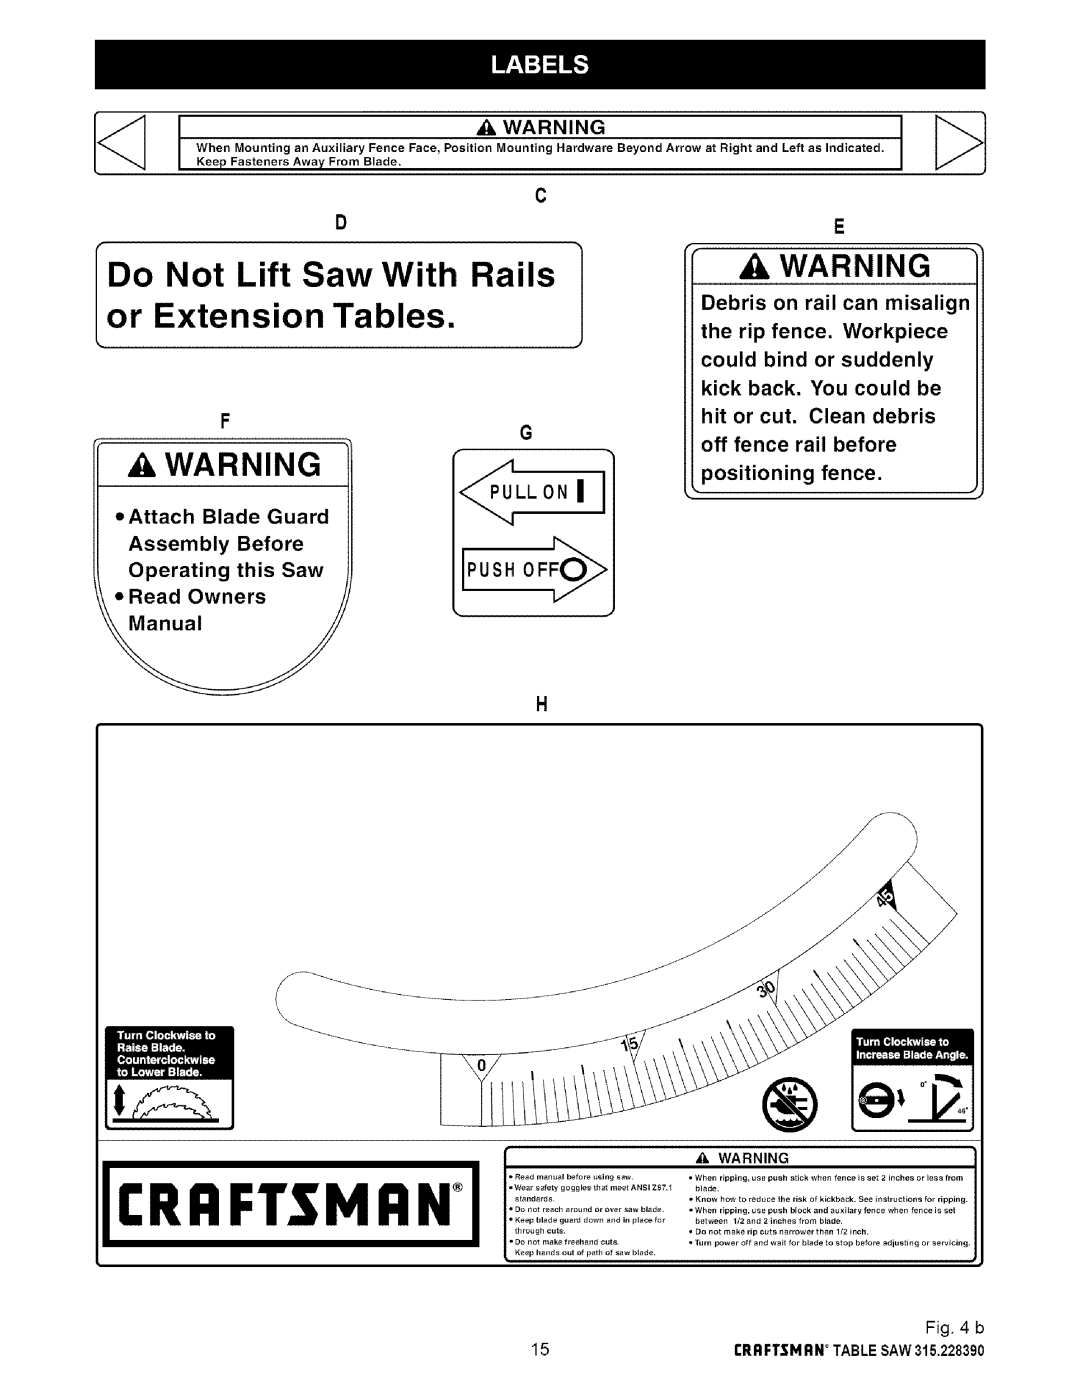 Craftsman 315.22839 IorDo ExtensionNotLiftSawTablesWith. Rails, Iirrftsmrni, off fence rail before positioning fence, Keep 